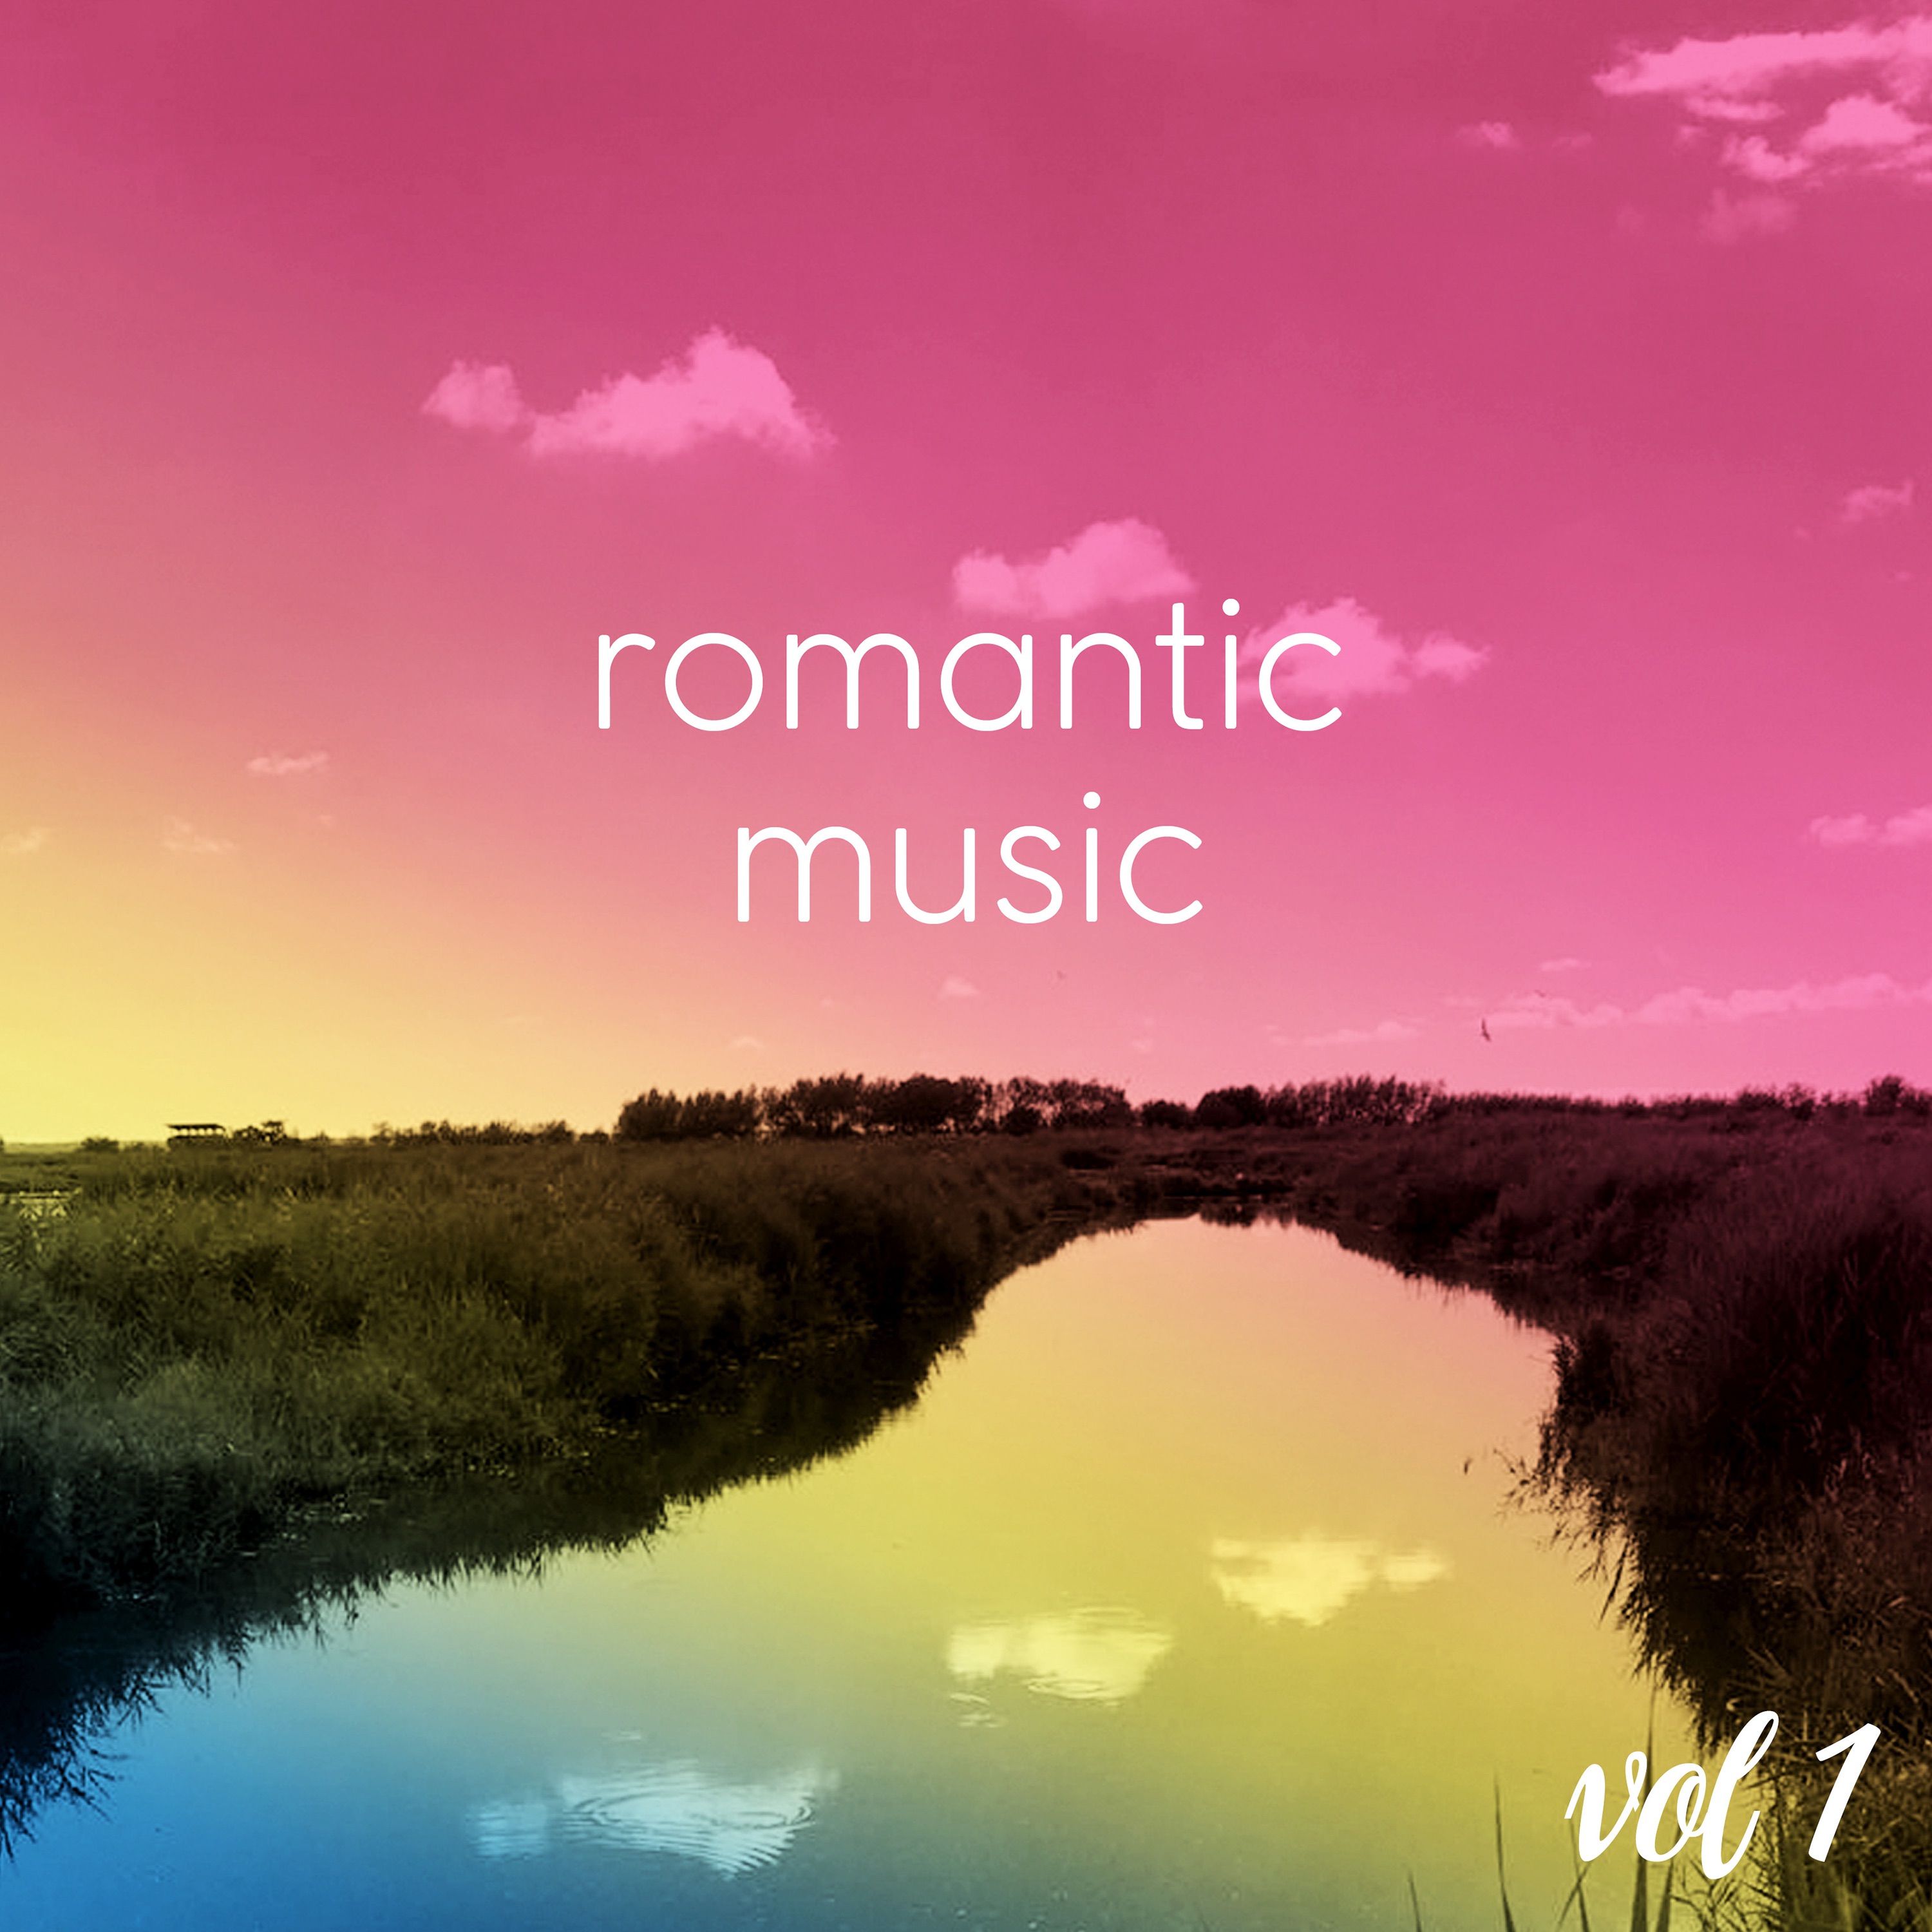 Romance music. Romantic Music. Романтическая музыка обложки. Романтичная песня. Romanticism Music.